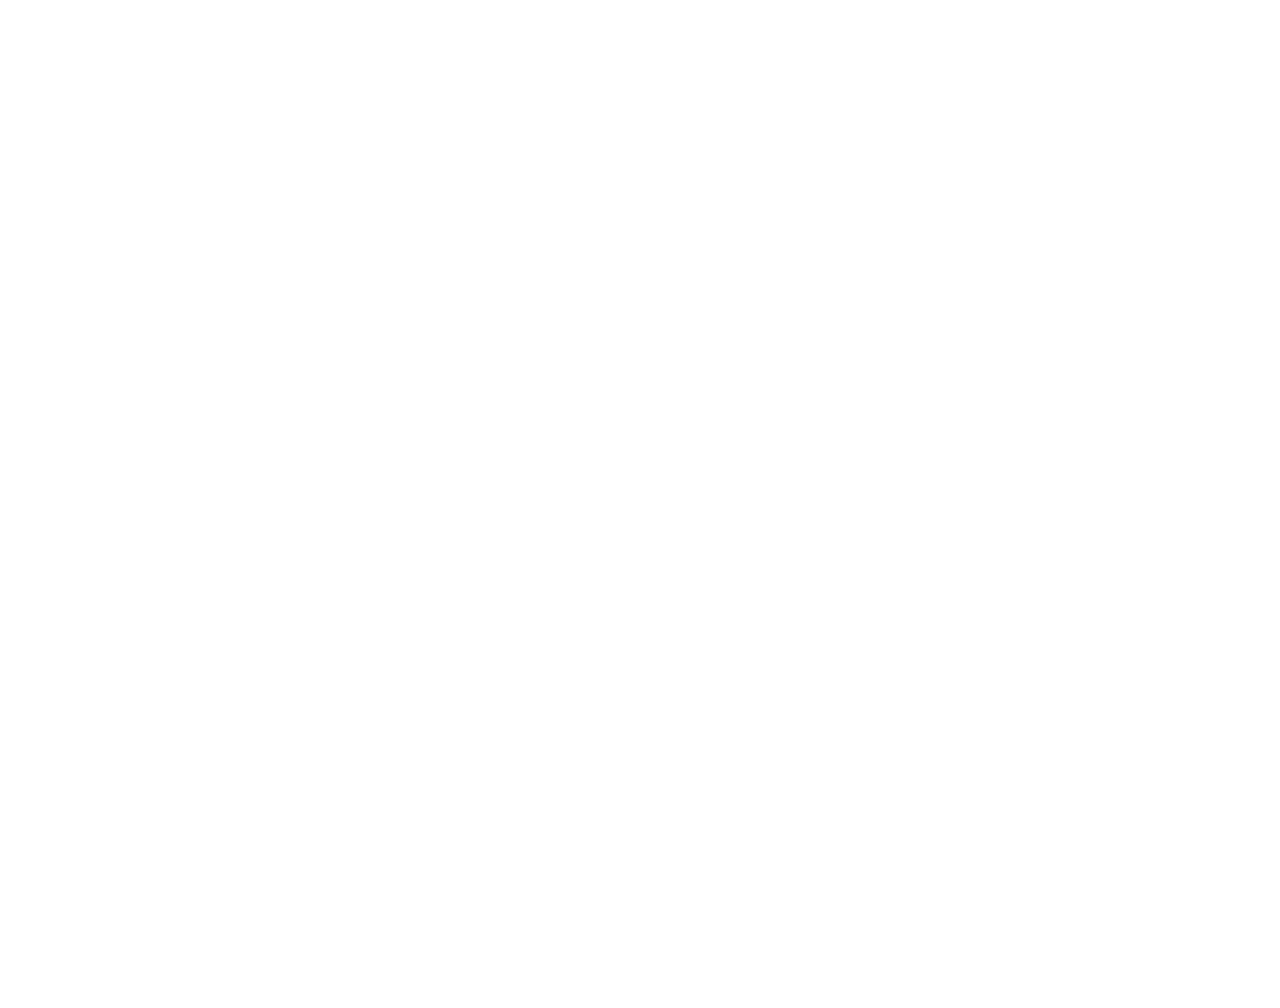 K. Gatavan. Hyacinthus. Fujifilm, 2015